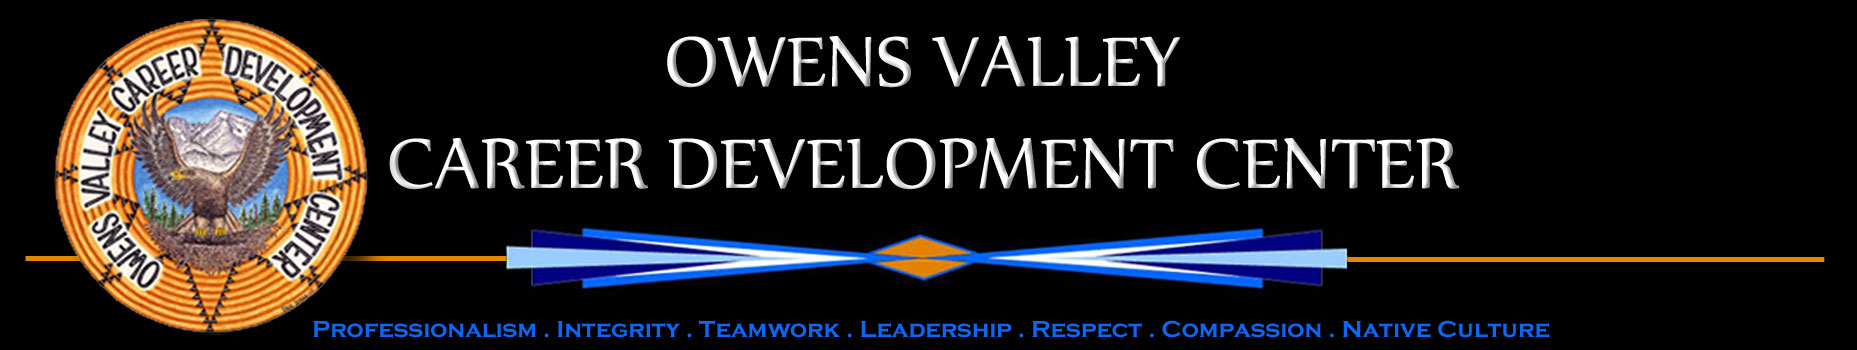 Owens Valley Career Development Center - Benton